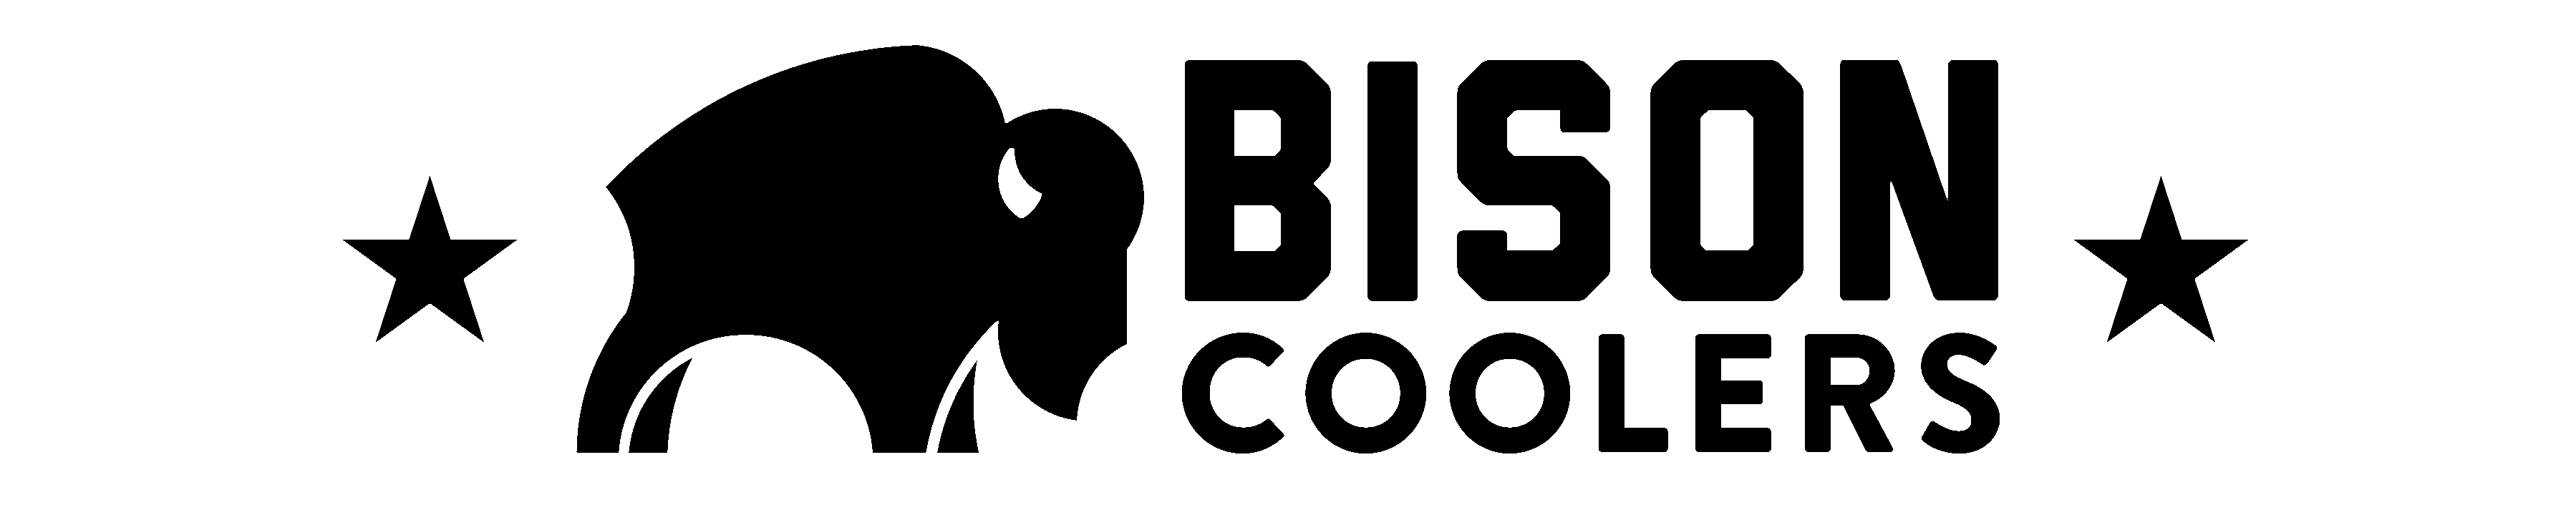 Bison Coolers Logo - Bison Coolers Cars of NWA